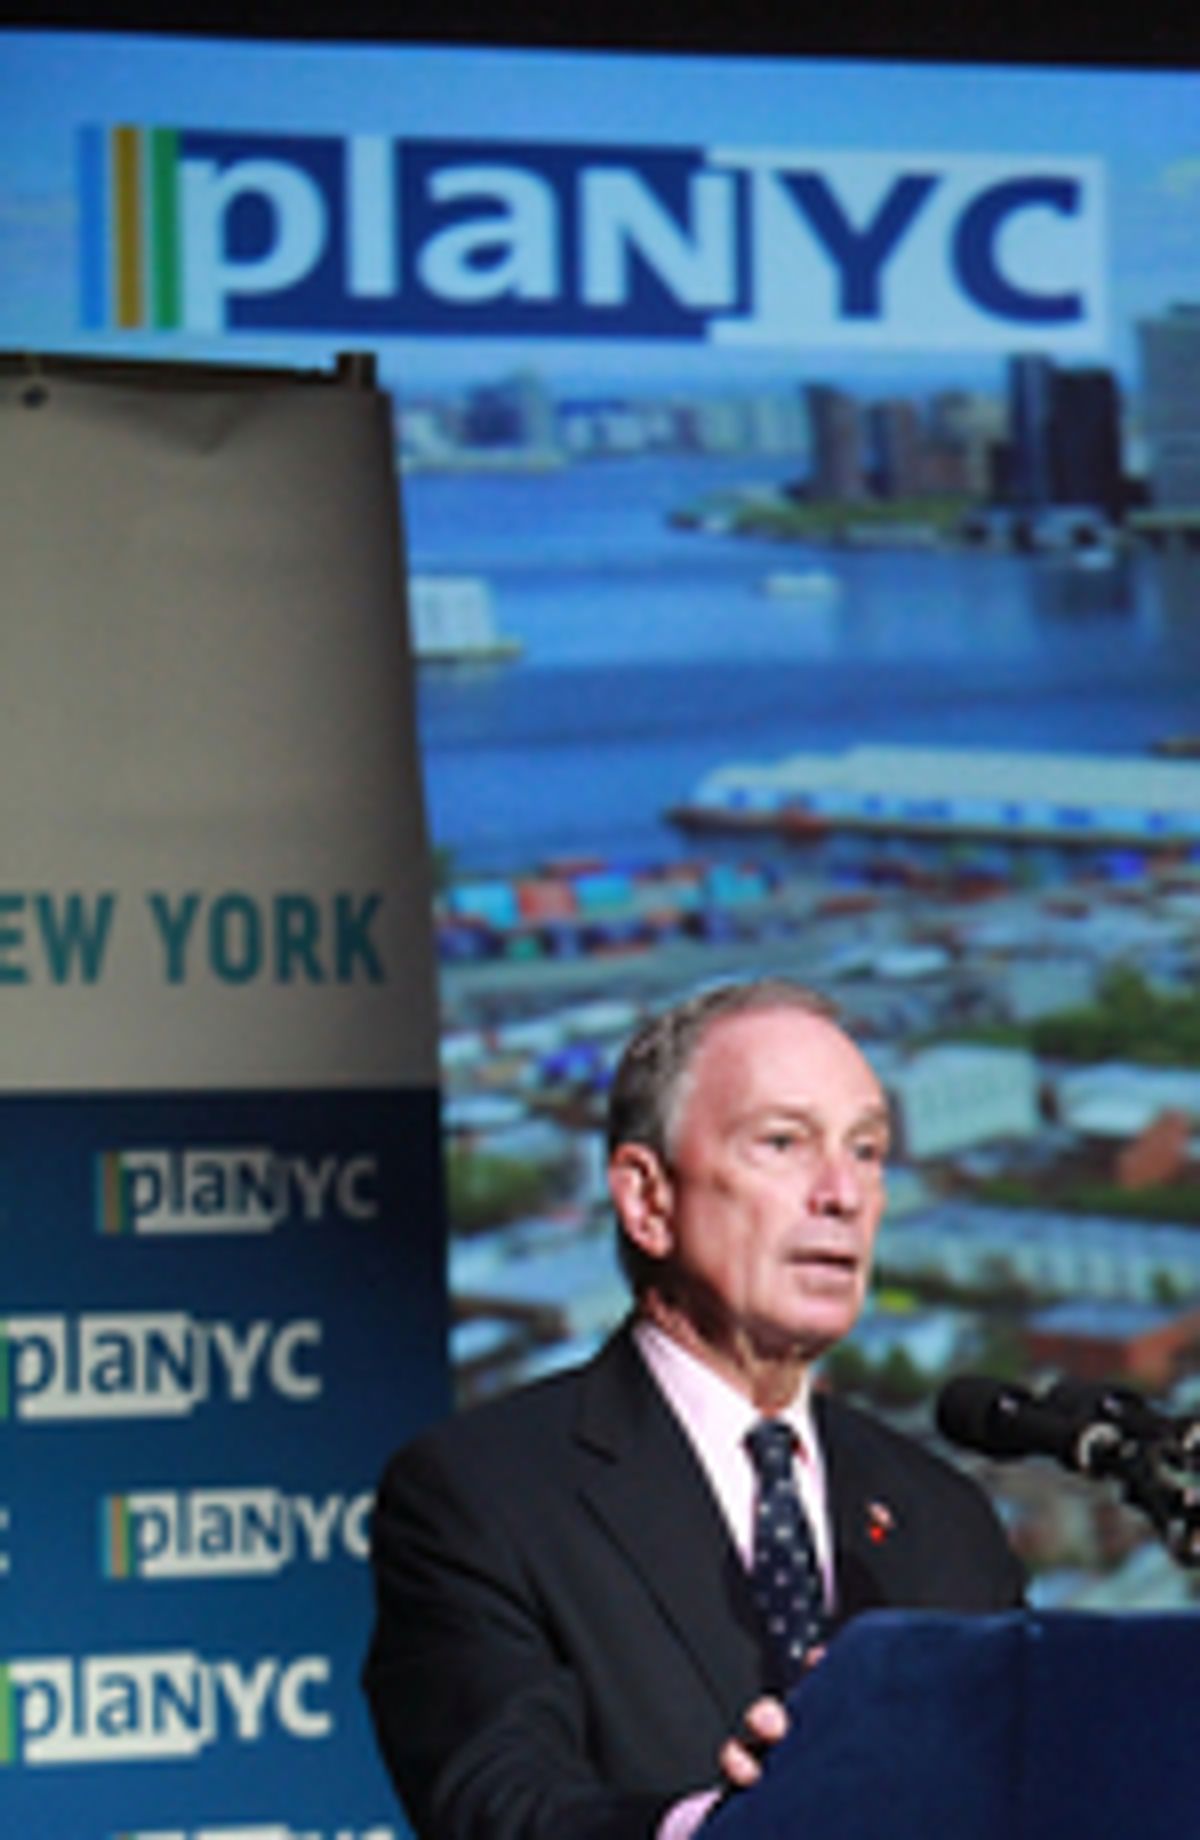 New York City Updates Greenification Plan